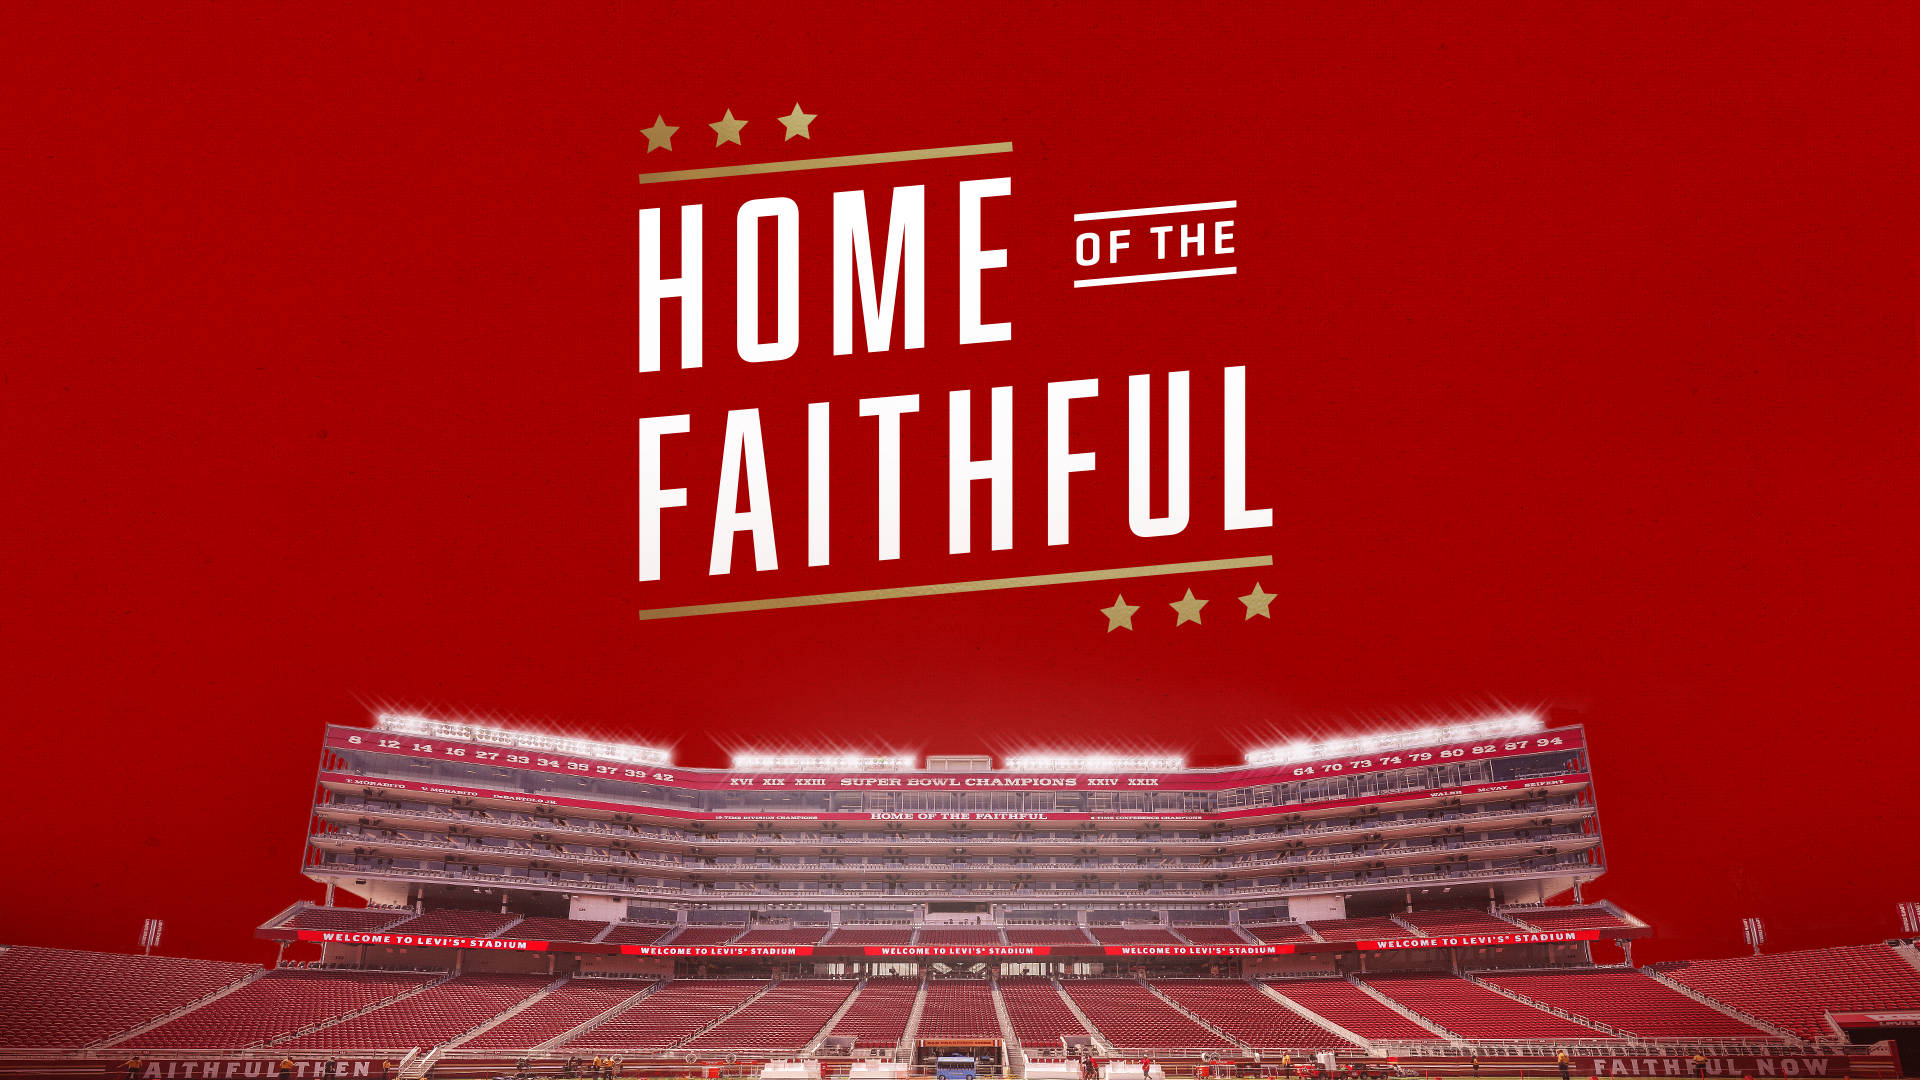 49ers Football Stadium Poster Background